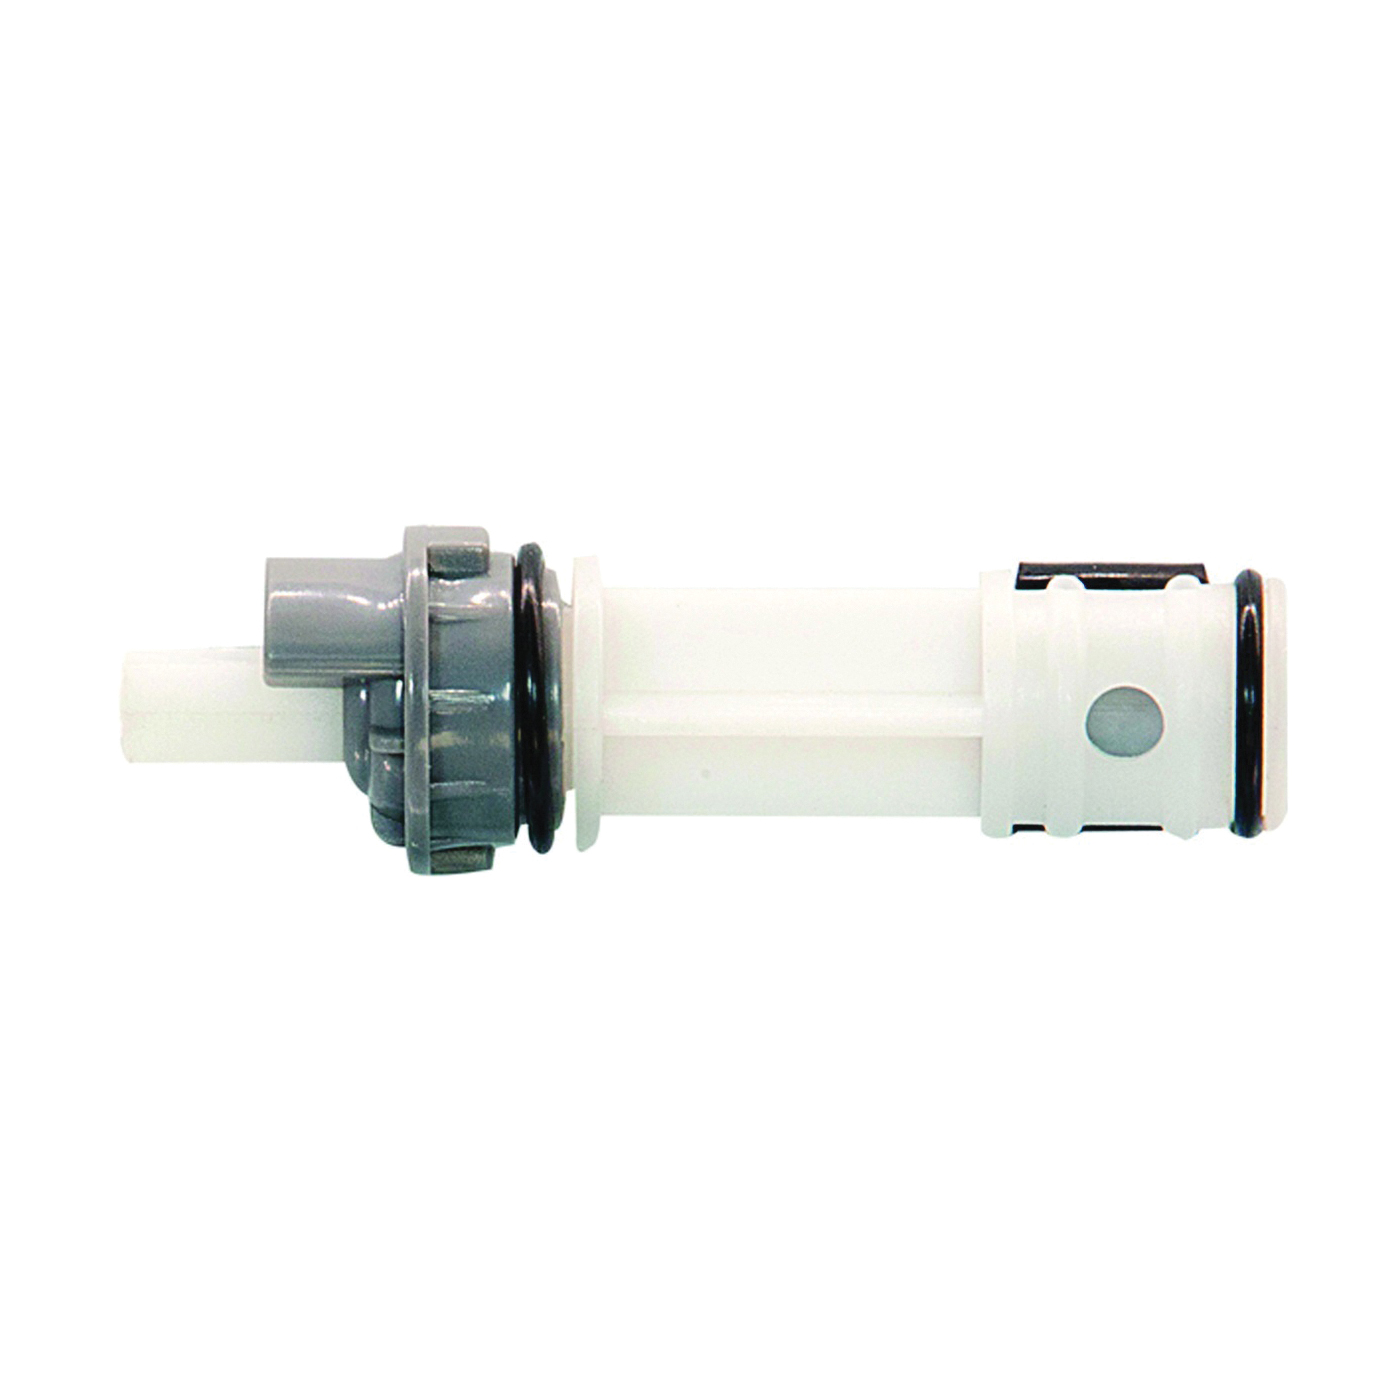 17450B Diverter Stem, Plastic, 3-1/8 in L, For: Delta/Delux Two Handle Model 2653, 2683, 2885 Tub/Shower Faucets